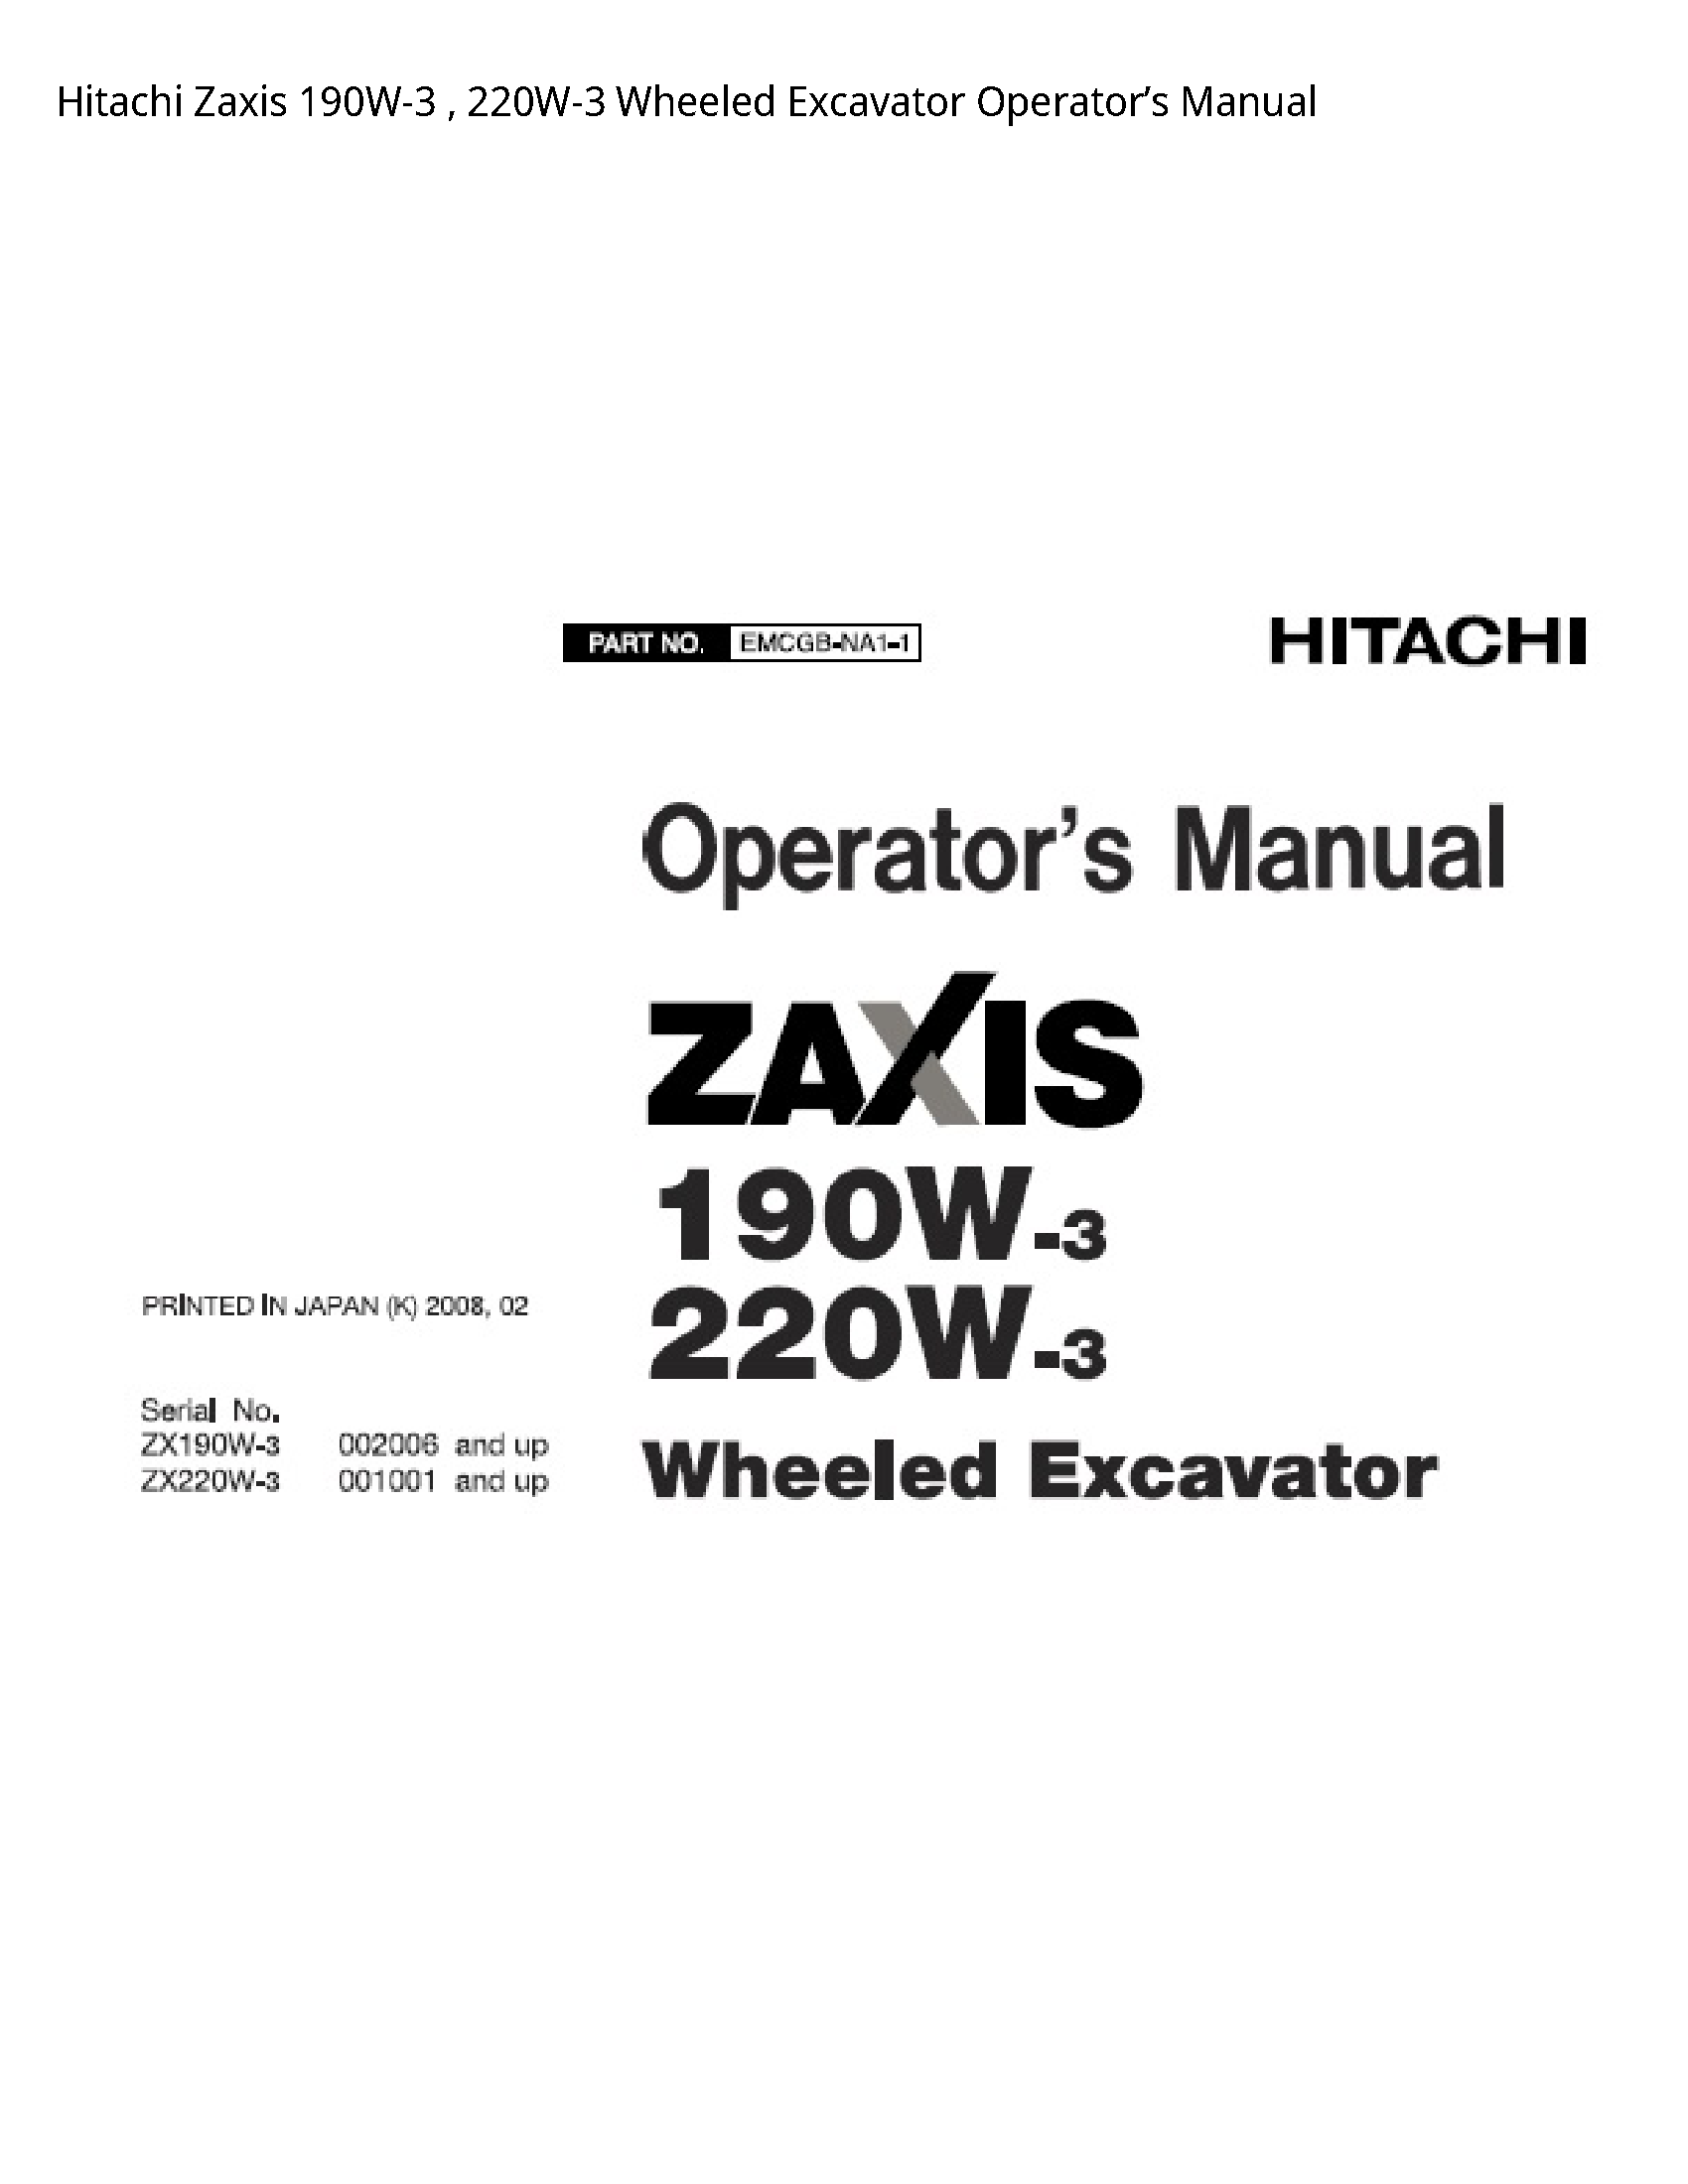 Hitachi 190W-3 Zaxis Wheeled Excavator Operator’s manual